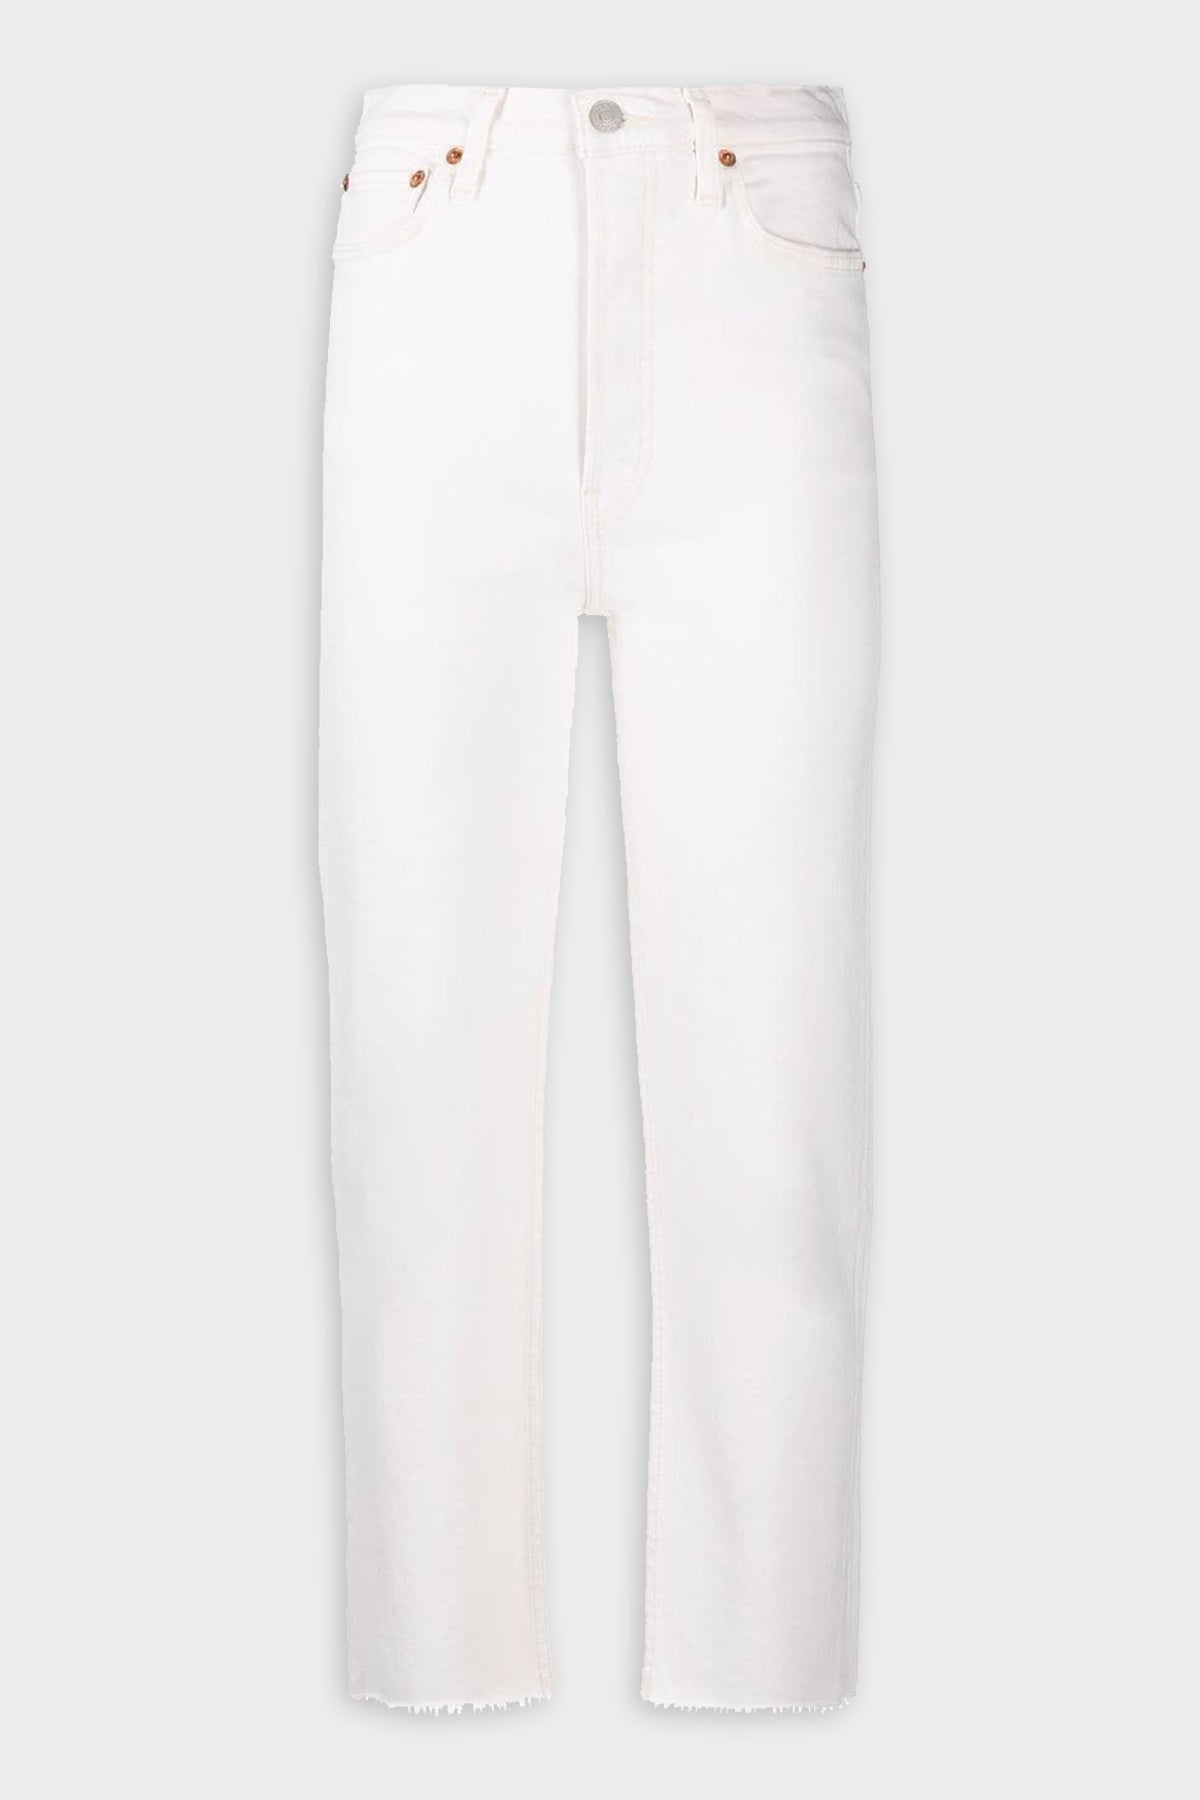 70s Stove Pipe Jeans in Vintage White - shop-olivia.com